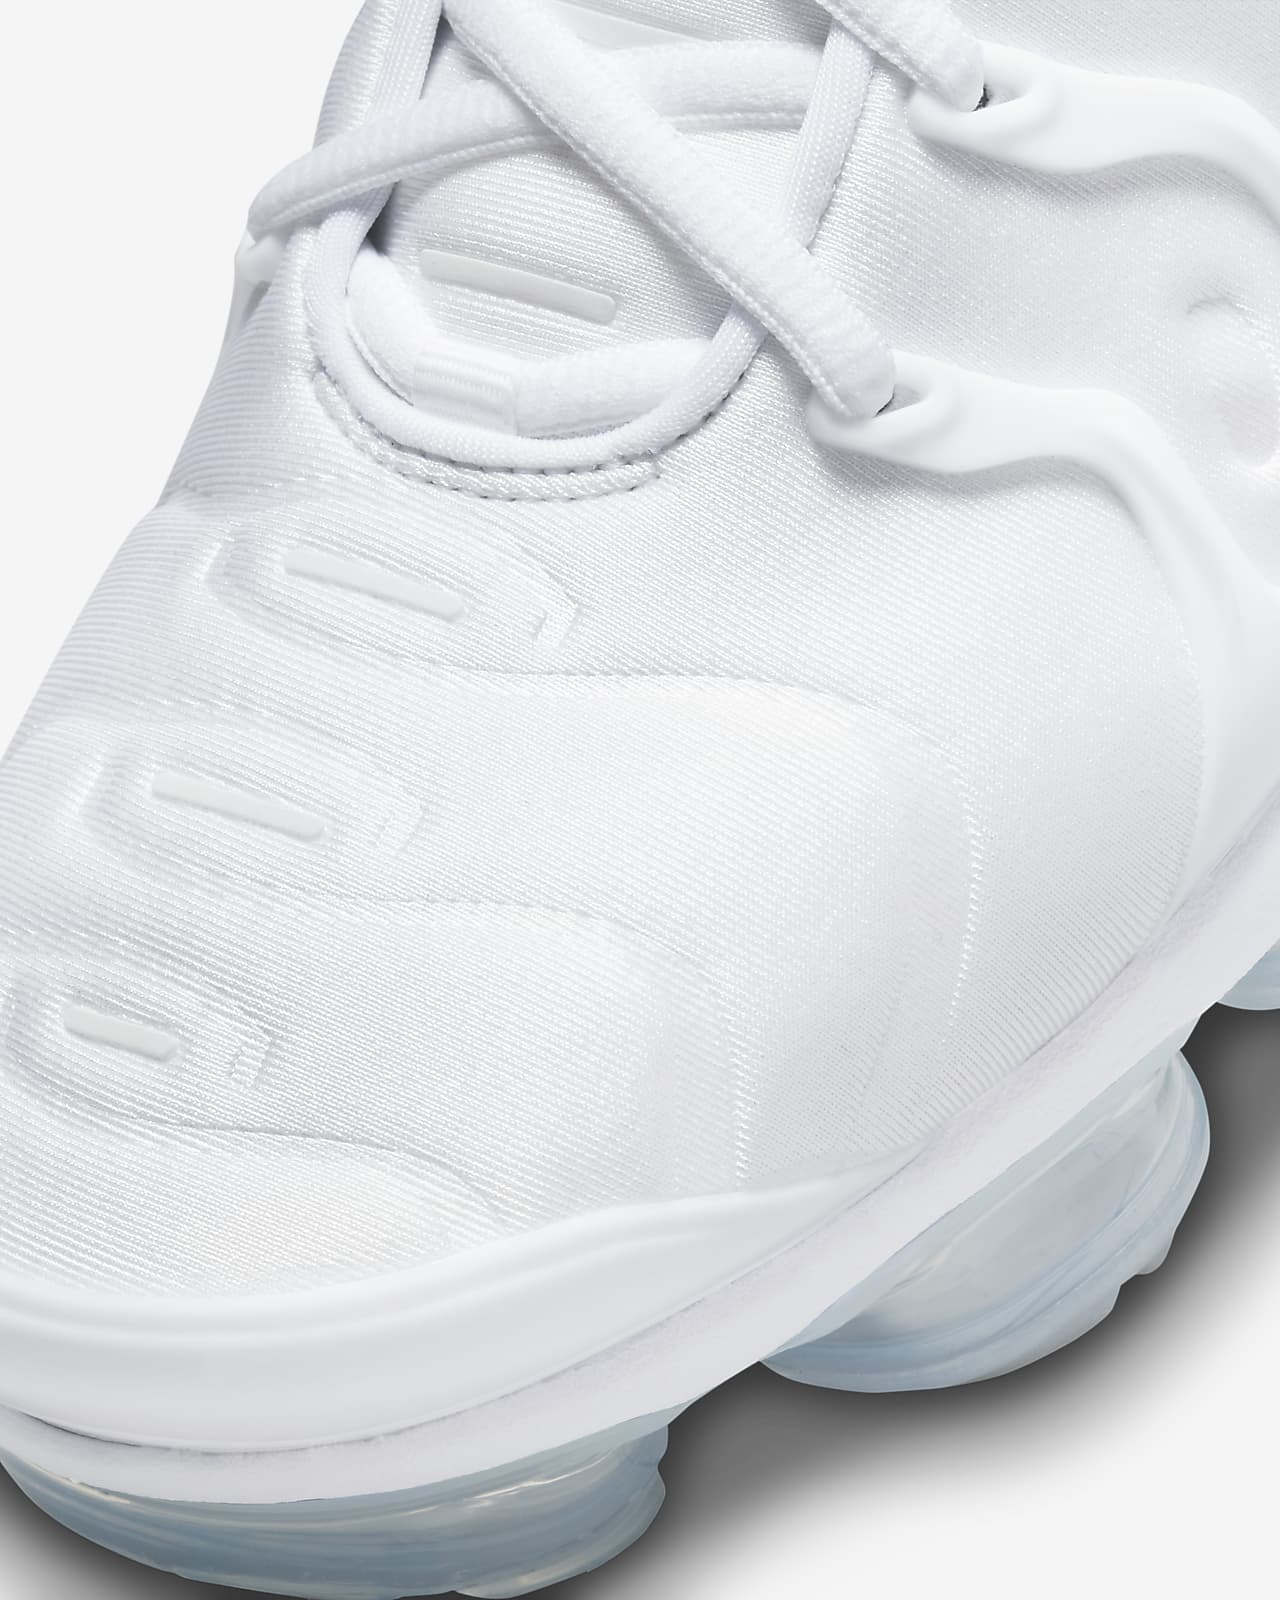 Nike Air VaporMax Plus Men's Shoes, White, 10.5